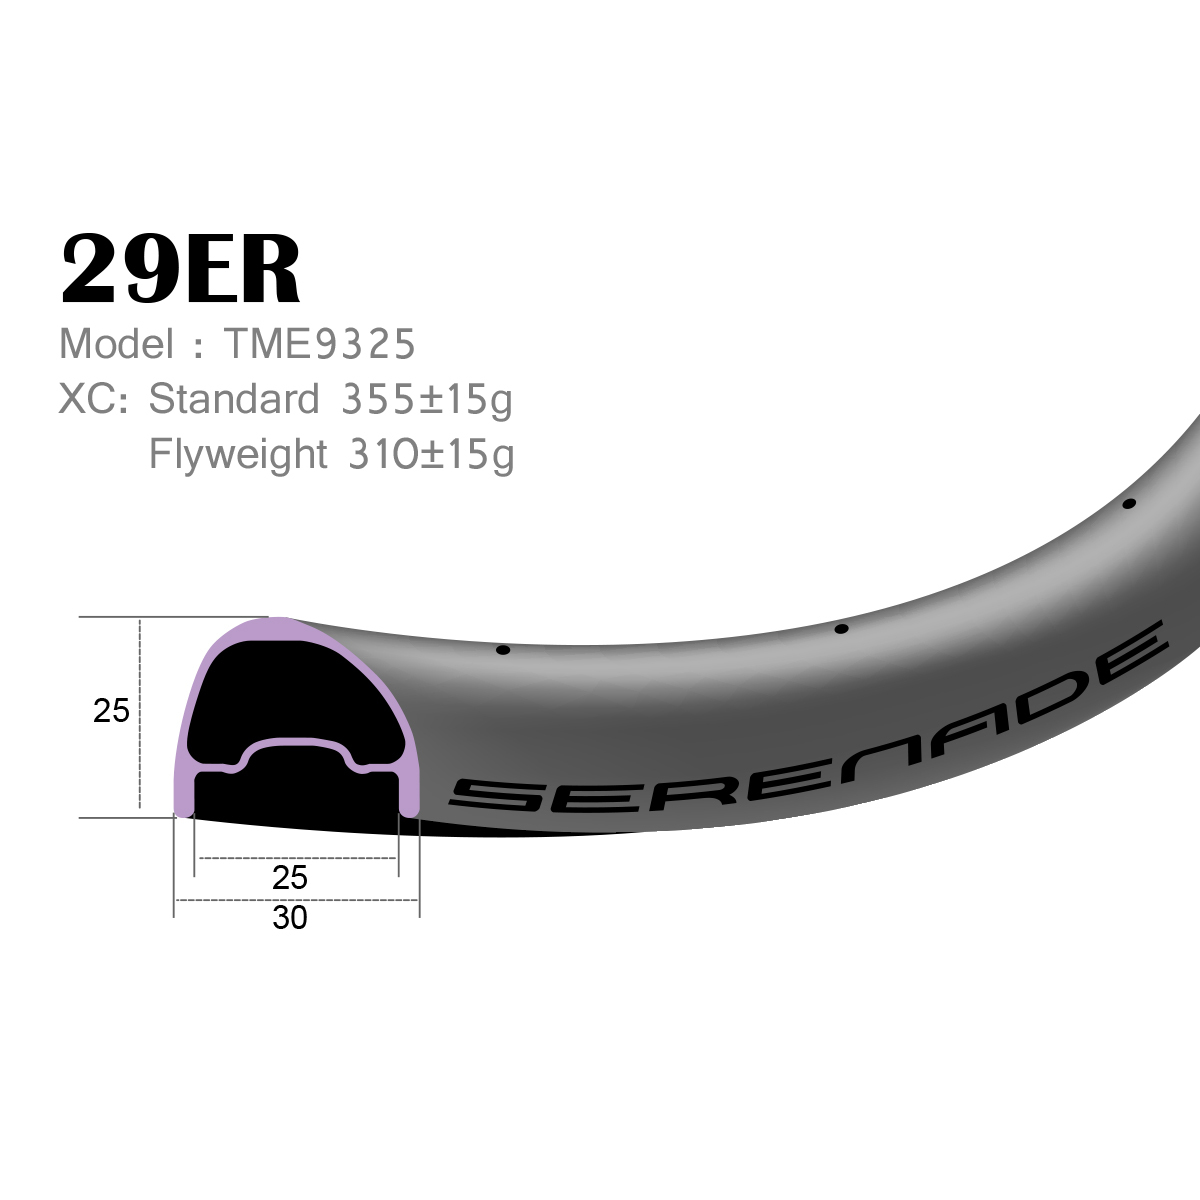 [TME9325] 29er xc / trail asymmetry 30mm Width Carbon Fiber 29" Mountain Bike Clincher Rim [Tubeless Compatible] 300g Flyweight 29er xc asymmetry mtb bike rims 25mm Carbon Fiber 29" 